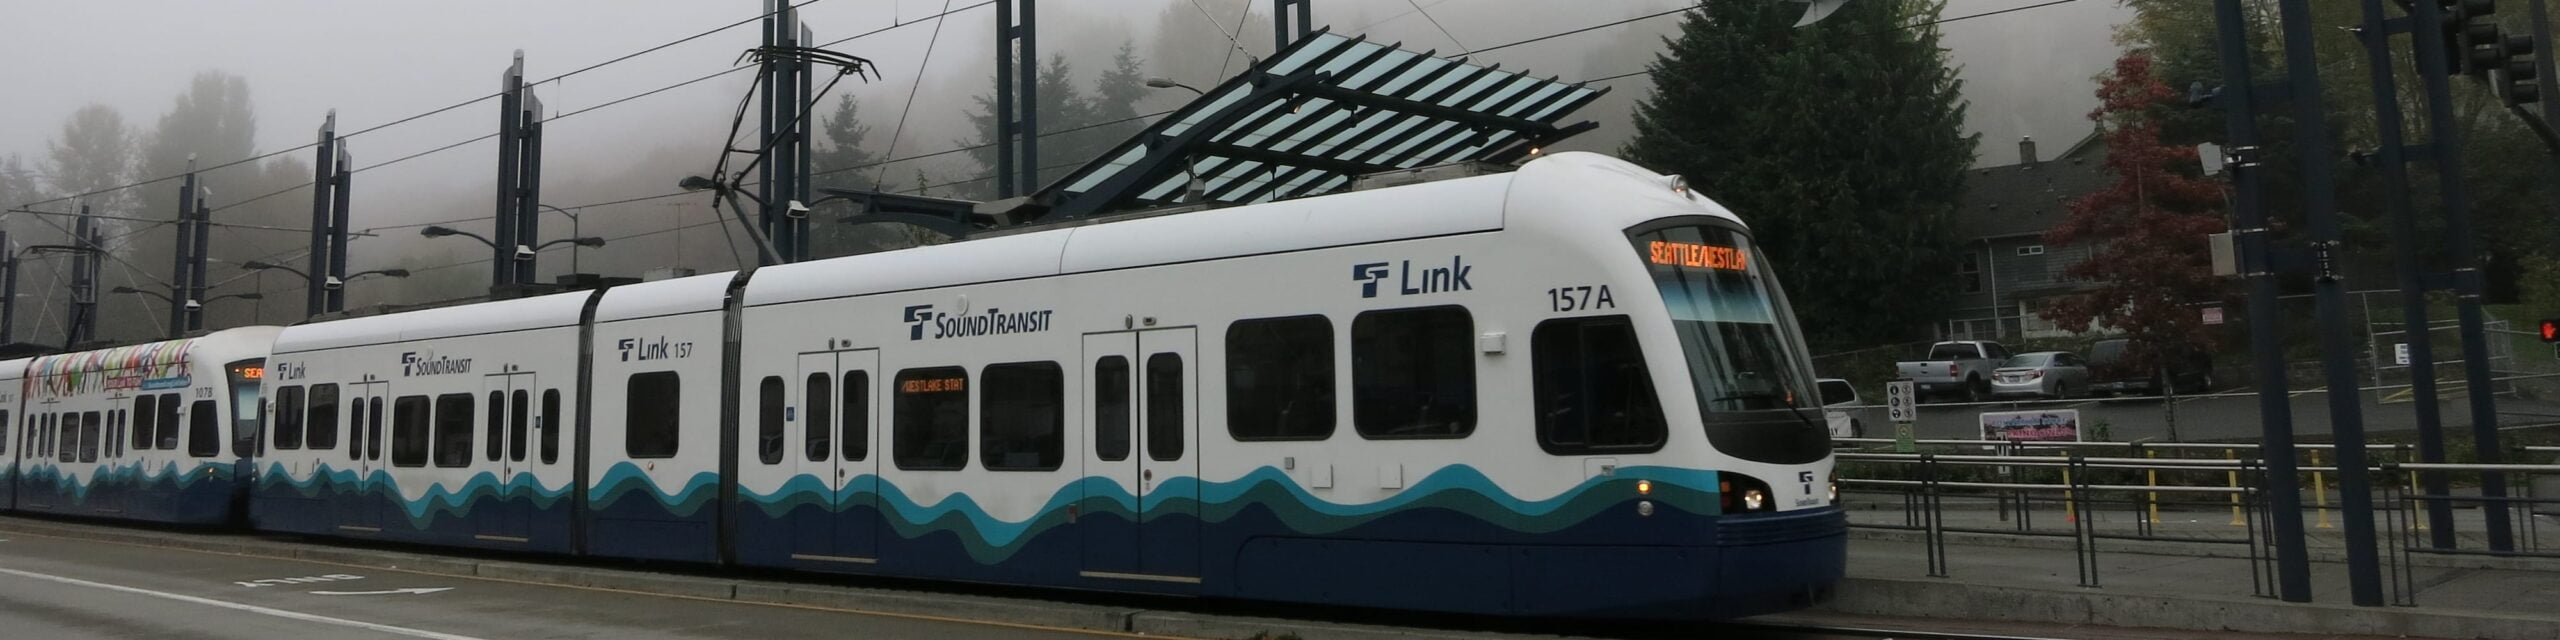 Photo of Sound Transit LRT.